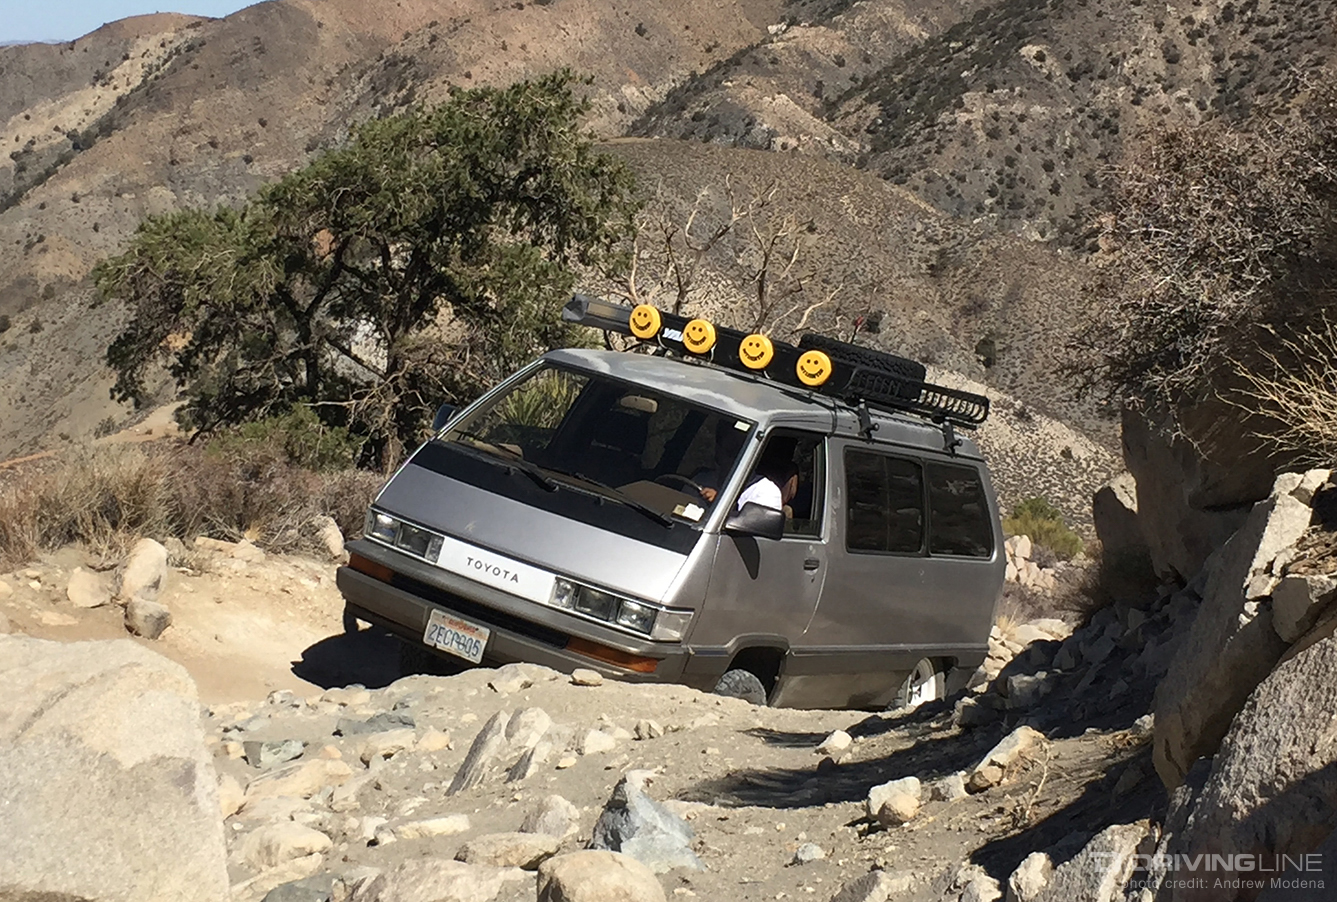 Van That Can: A 4x4 Toyota Van the Rocks | DrivingLine